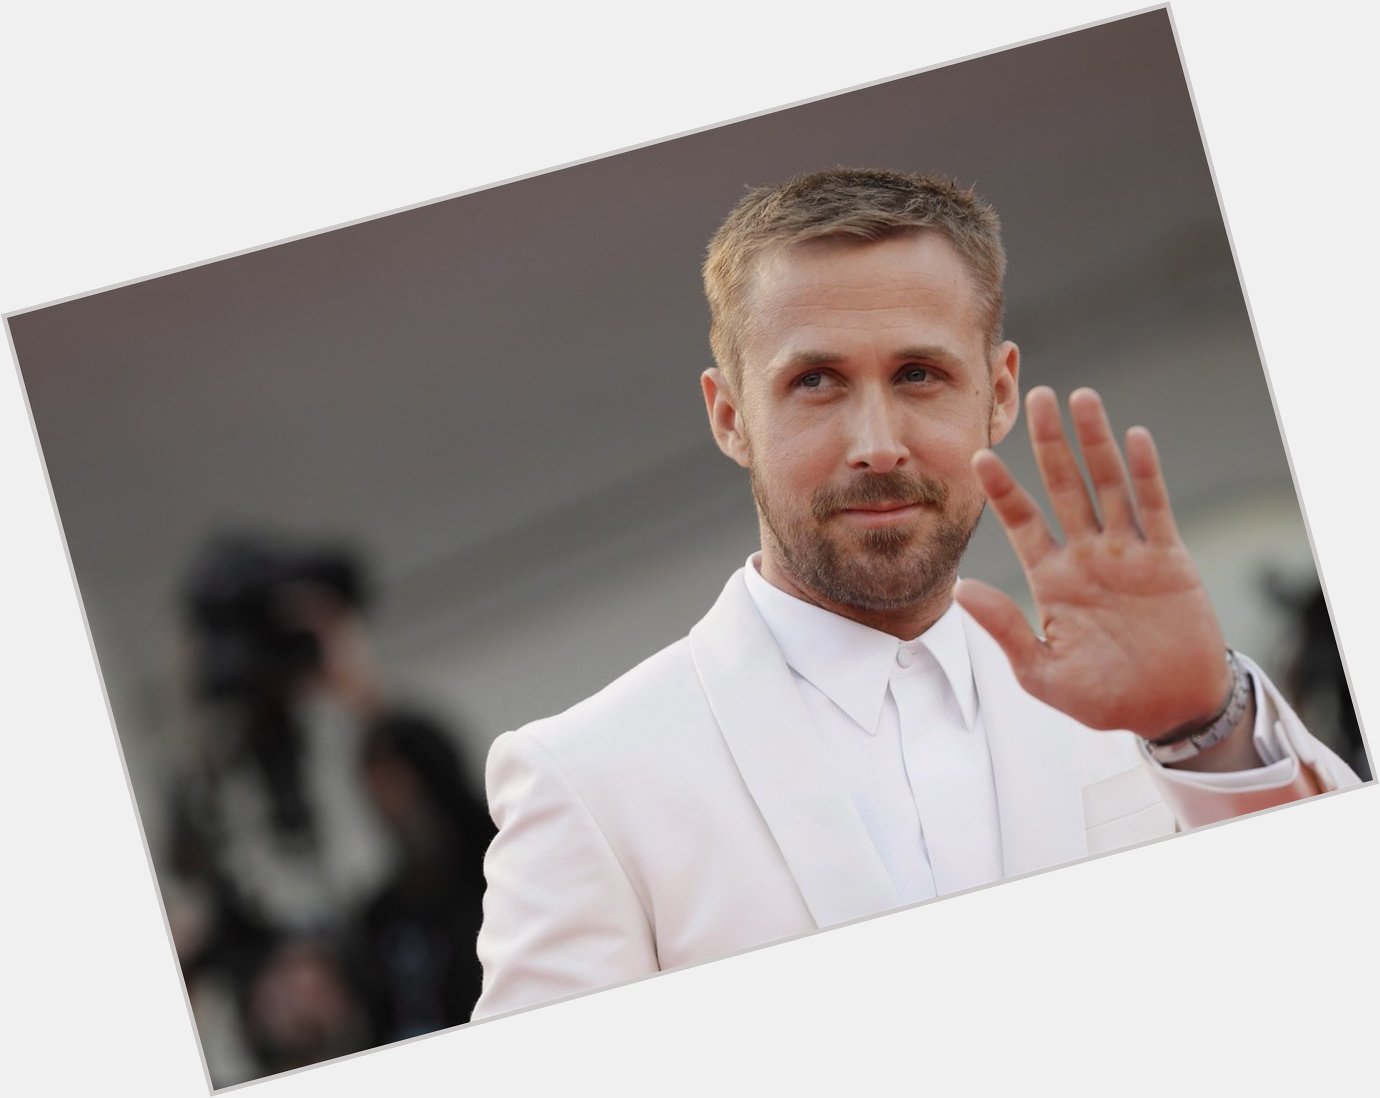 Happy birthday to Ryan Gosling, who turns 41 today! 